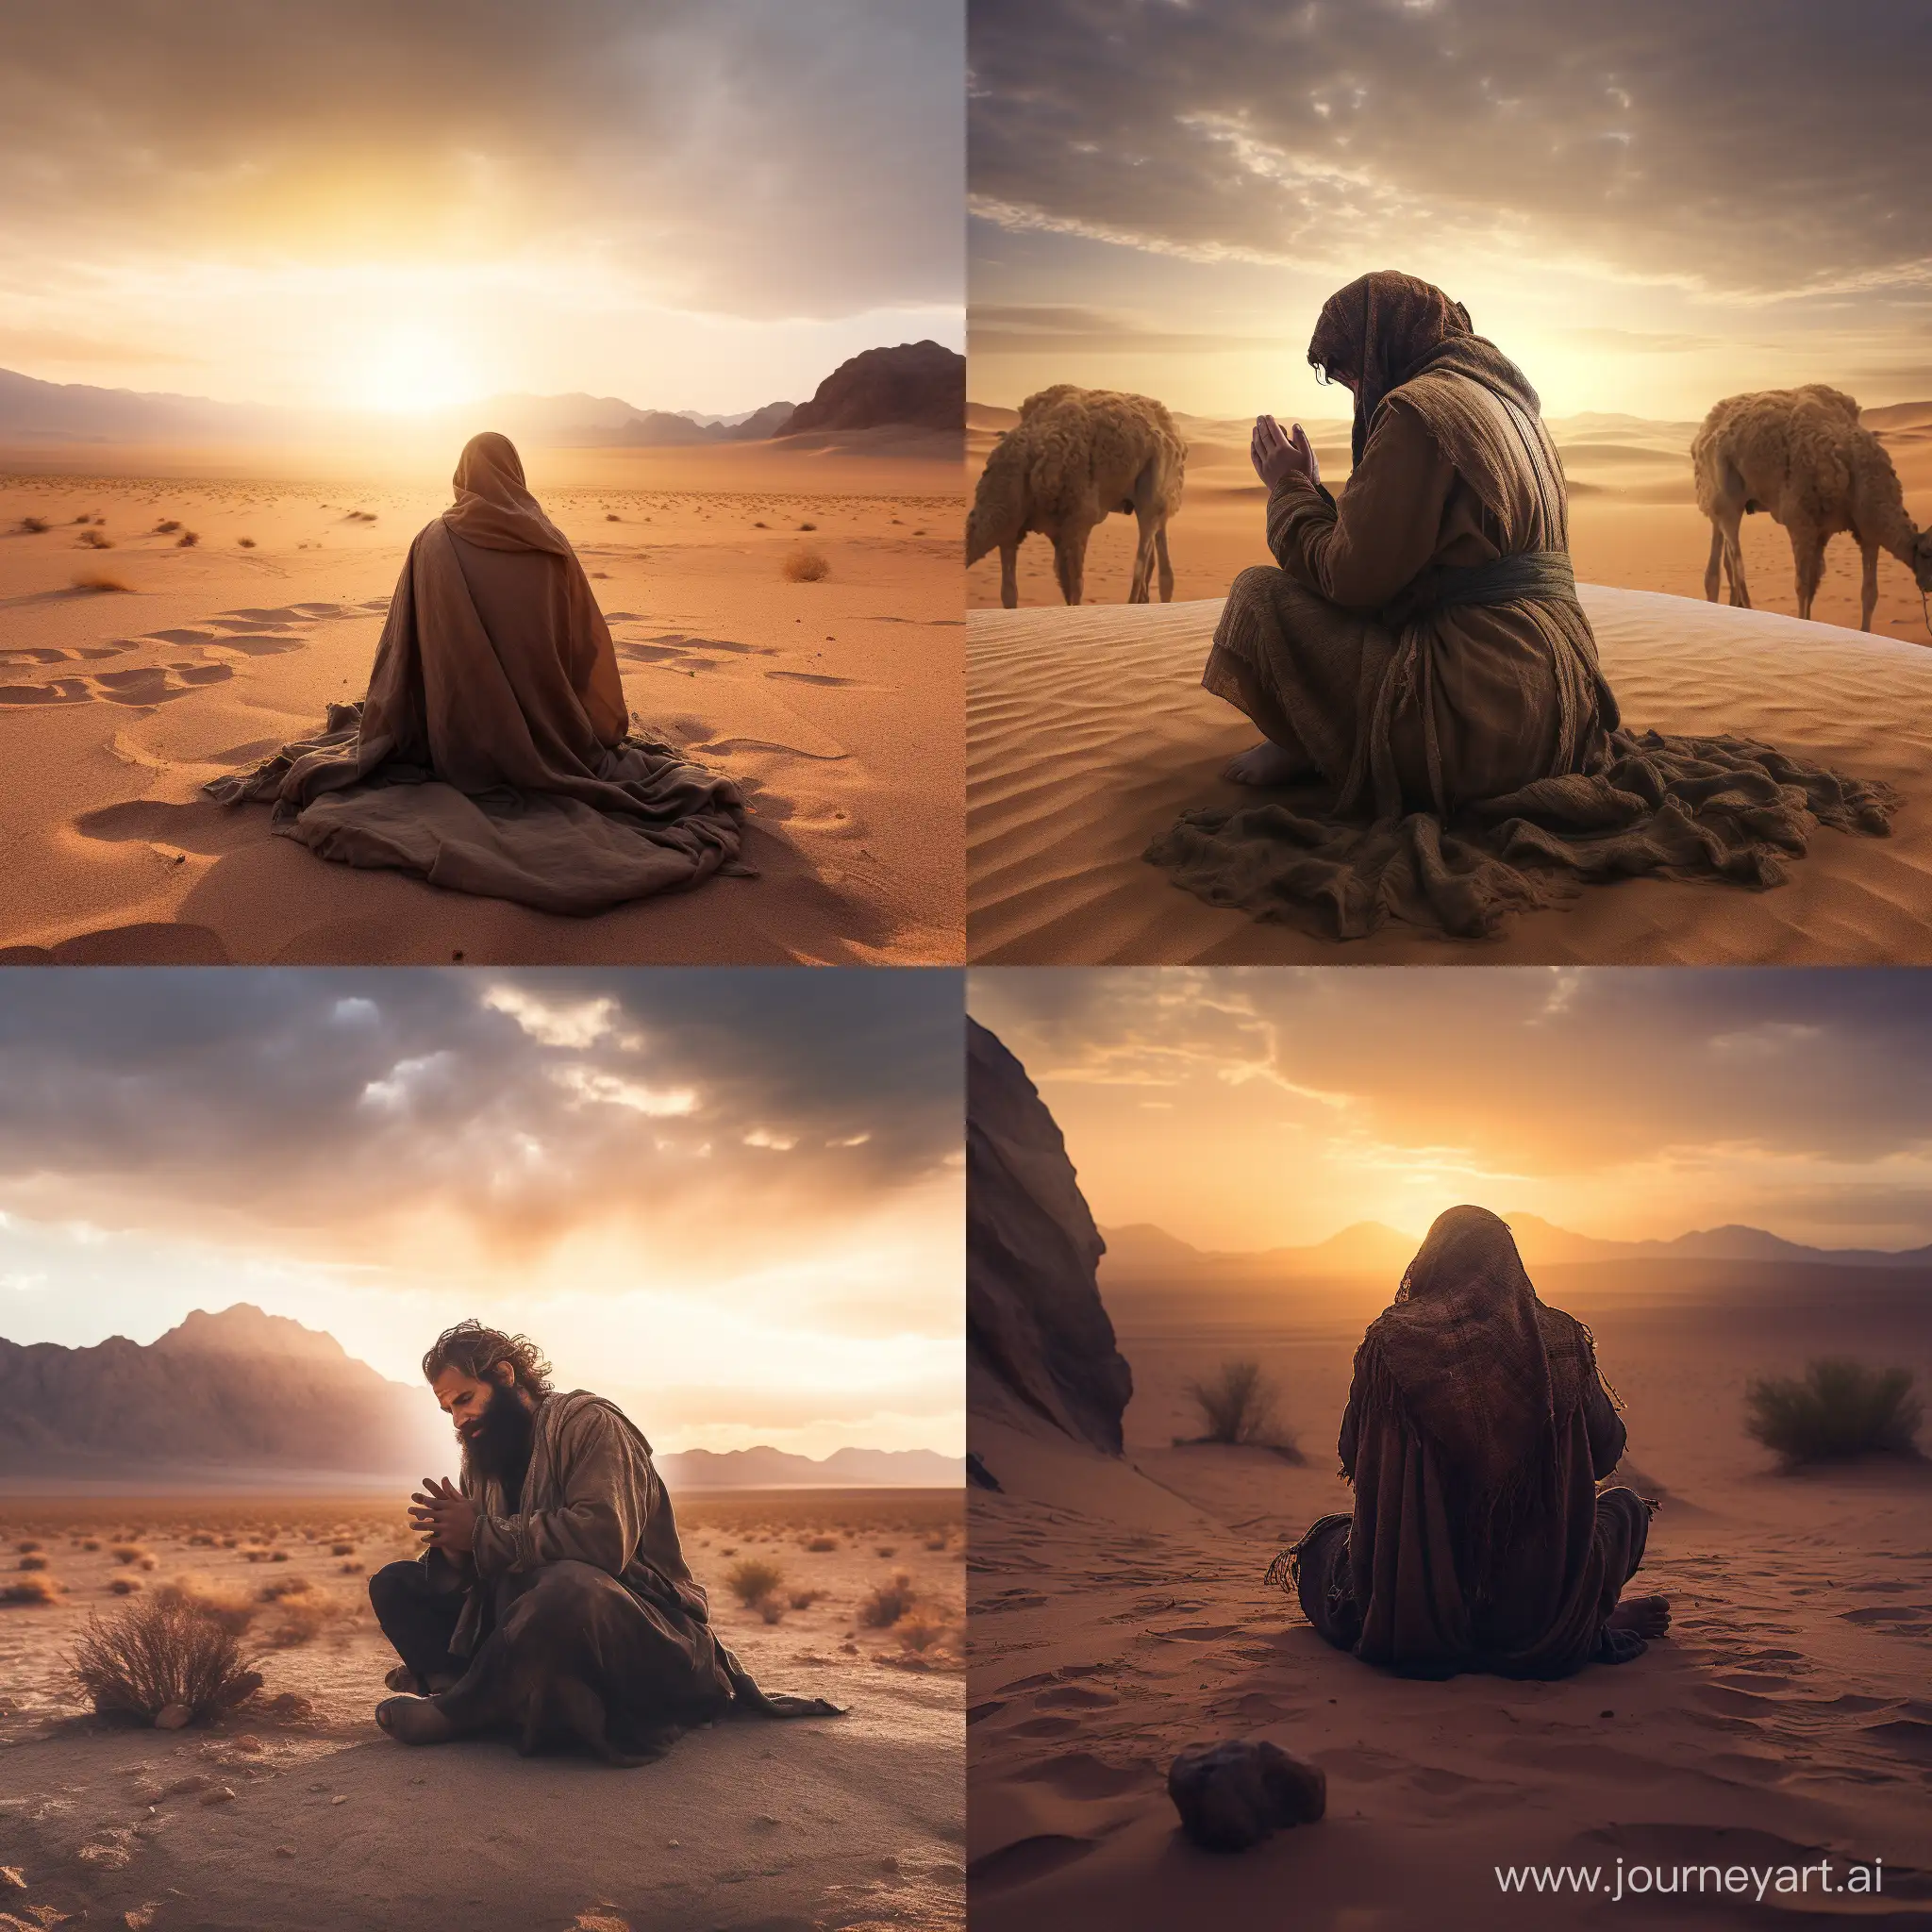 Desert-Dweller-in-Prayer-Spiritual-Connection-Amidst-Arid-Beauty